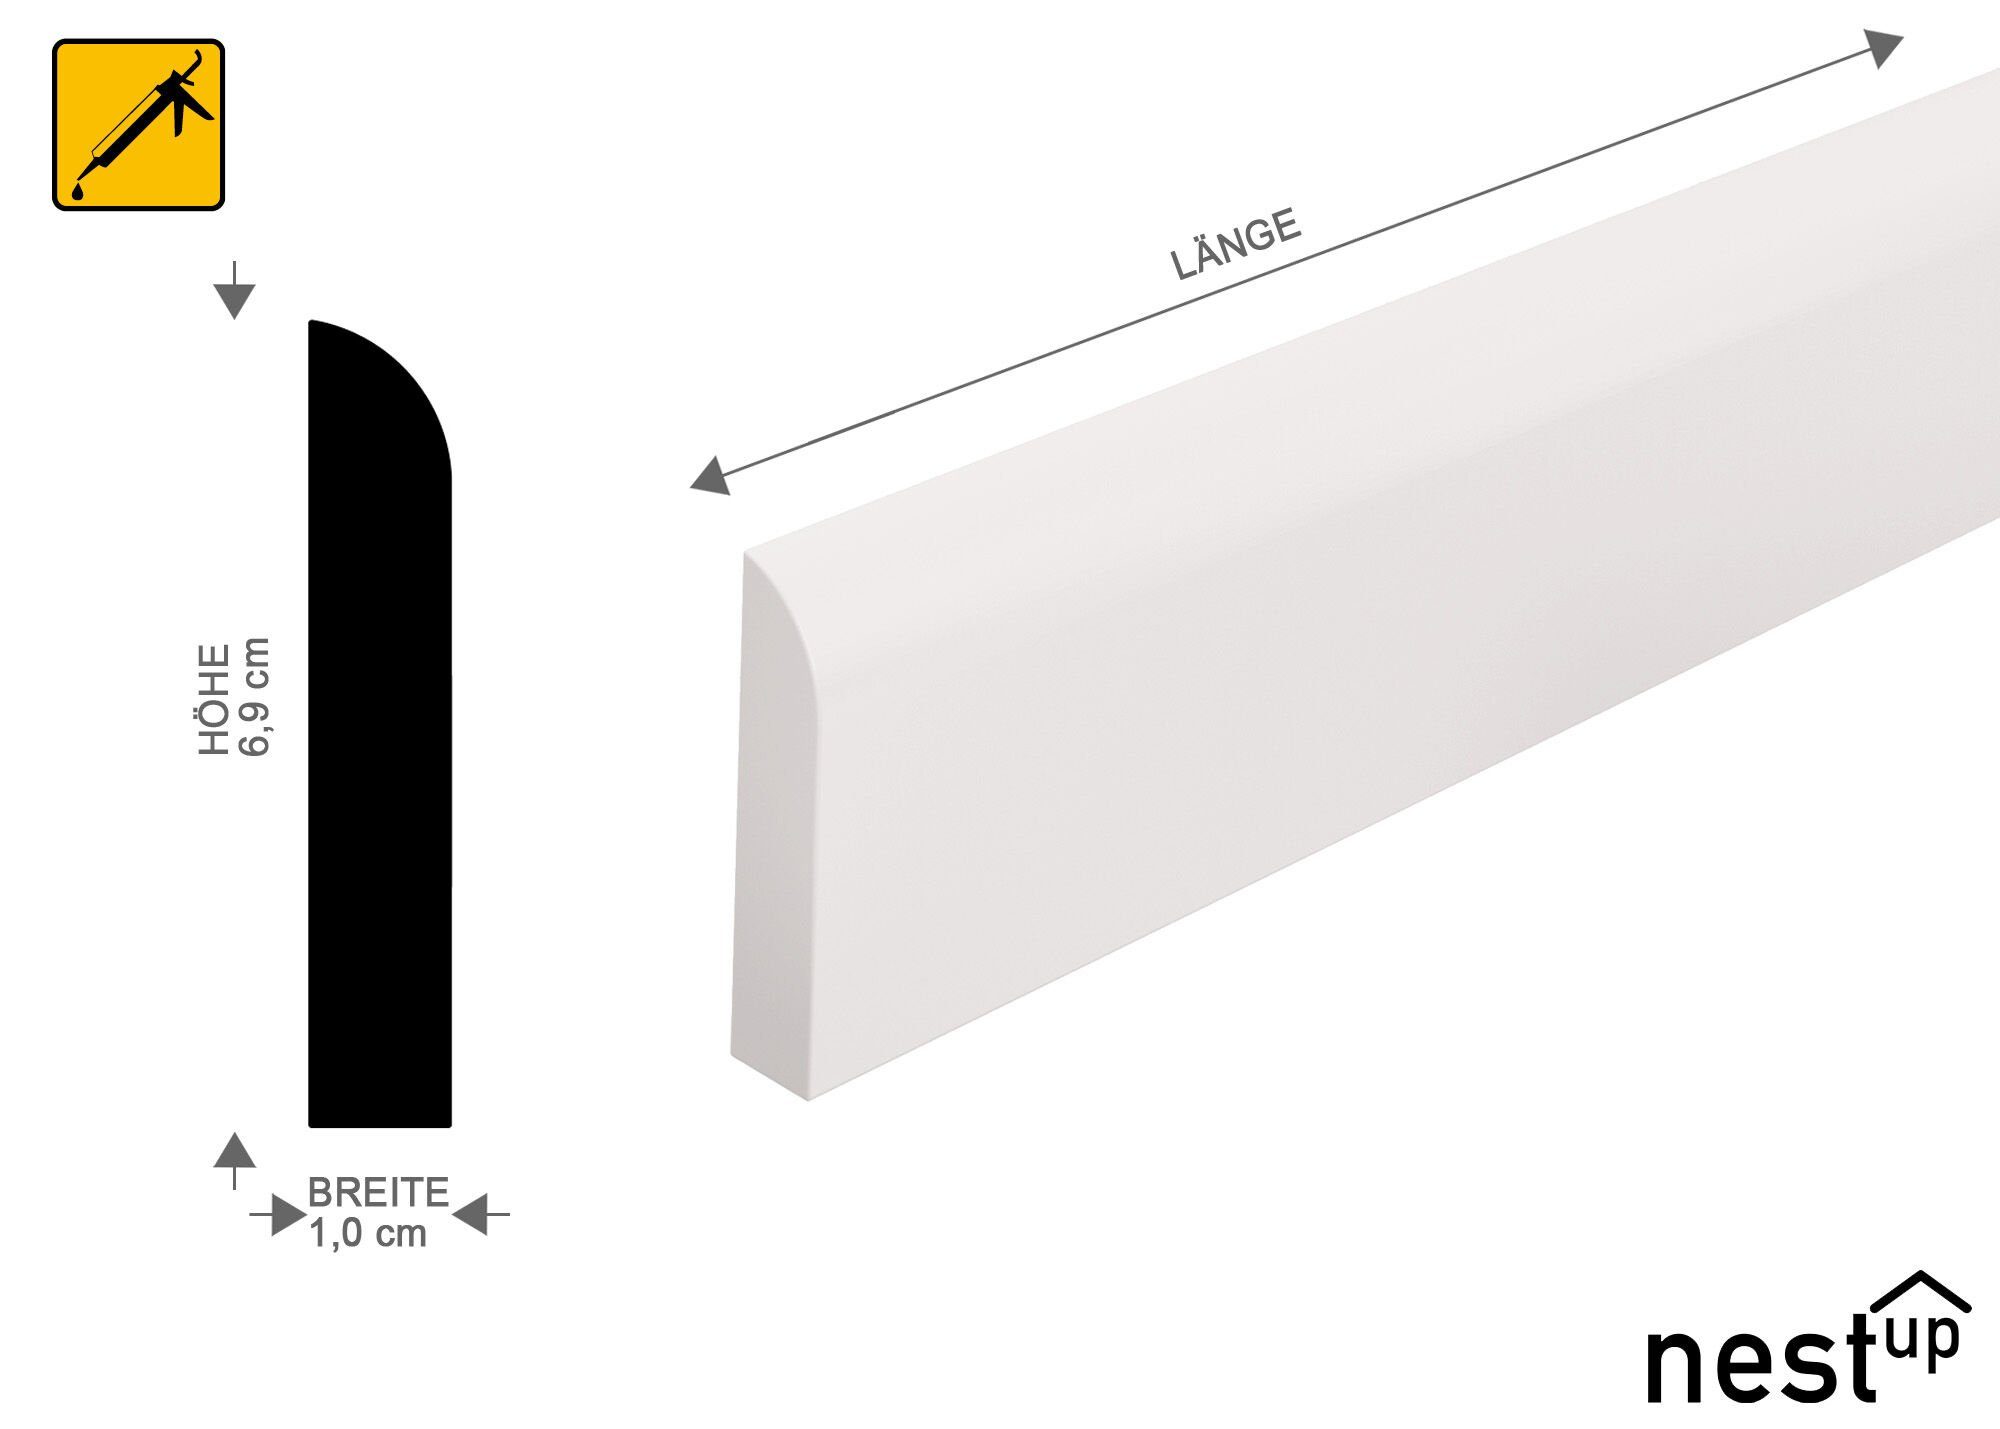 6.9 NUK02 10x69x2400 cm, Biegebare H: Leiste weiß, 240 cm, nestup Sockelleiste L: Stück 1